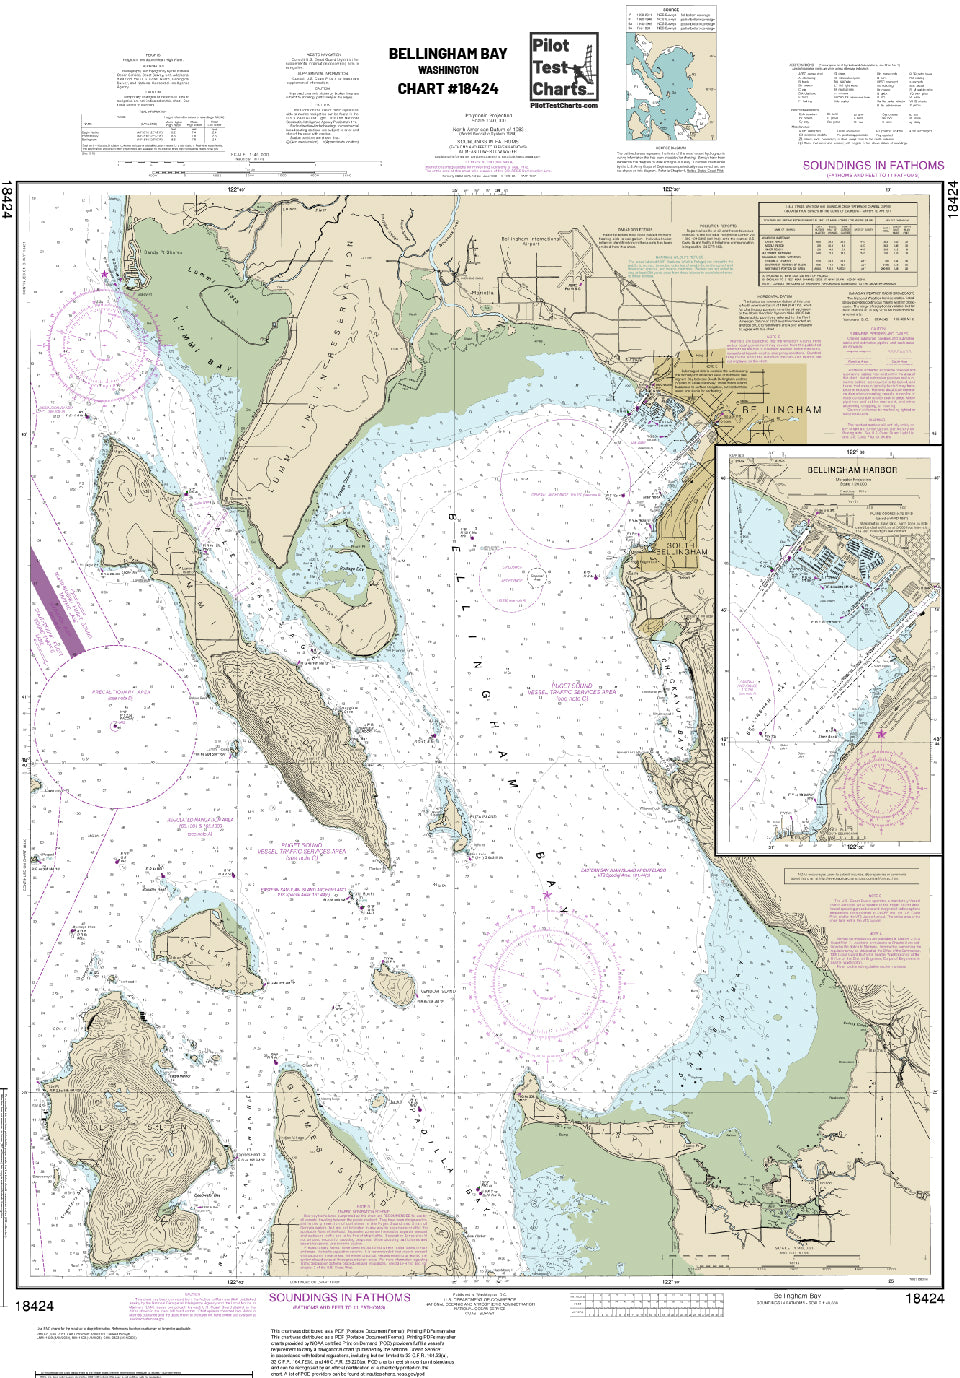 #18424 Bellingham Bay, Washington Chart